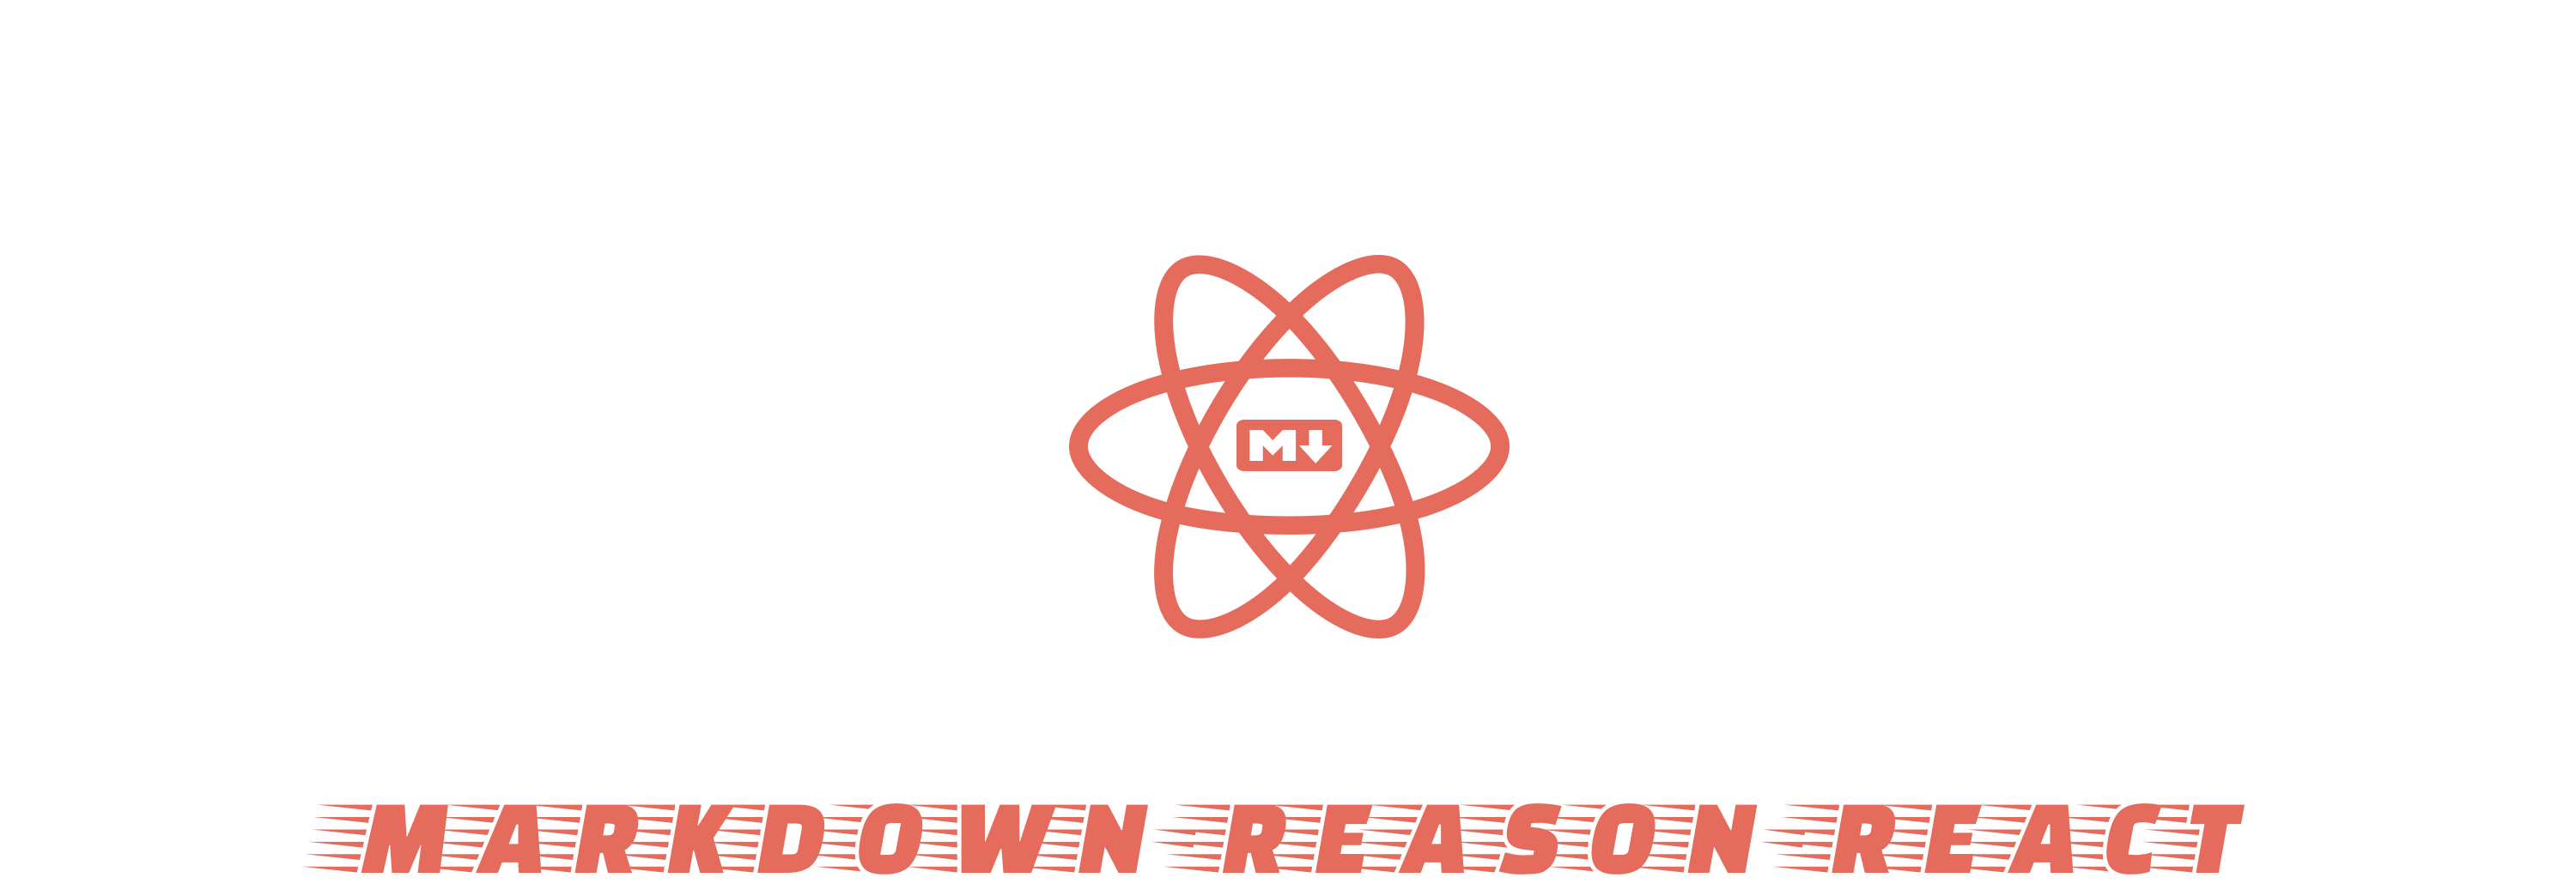 markdown-reason-react